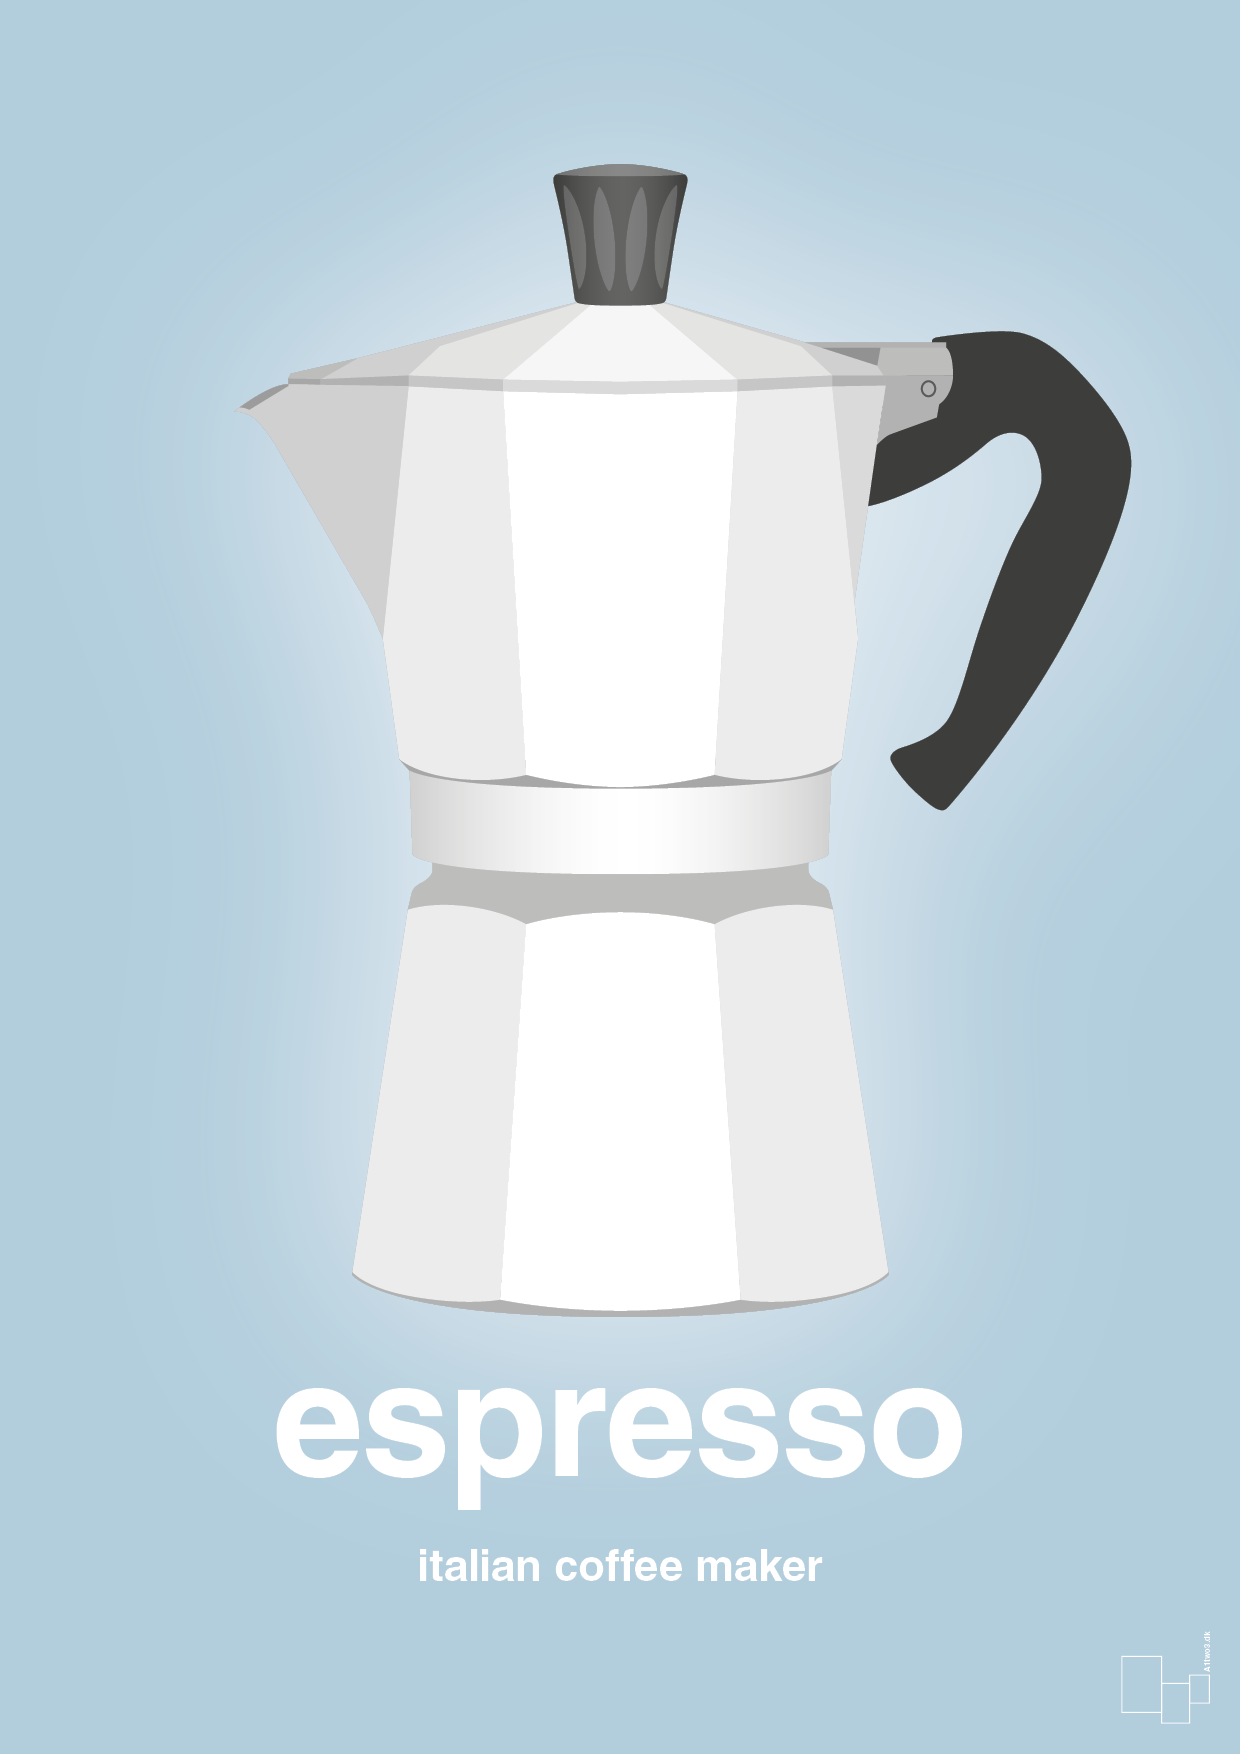 espresso - italian coffee maker - Plakat med Mad & Drikke i Heavenly Blue